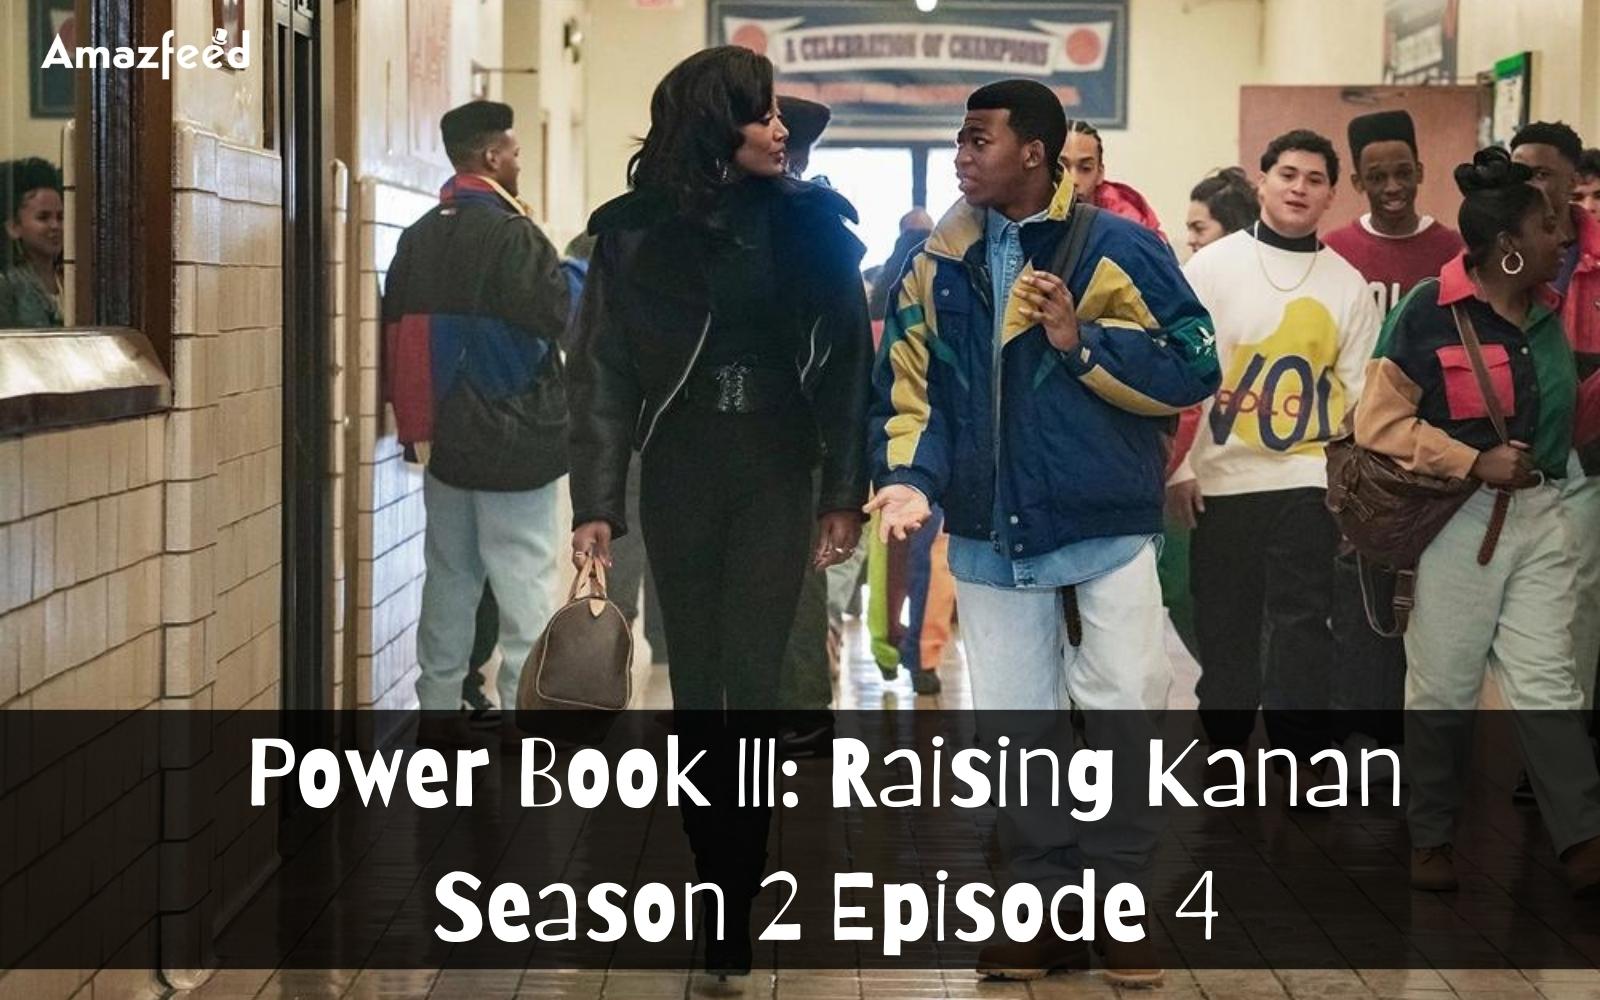 Power Book III: Raising Kanan Season 2 Episode 4 "Pay the Toll" Release Date, Countdown, Spoiler, Premiere Time, Recap